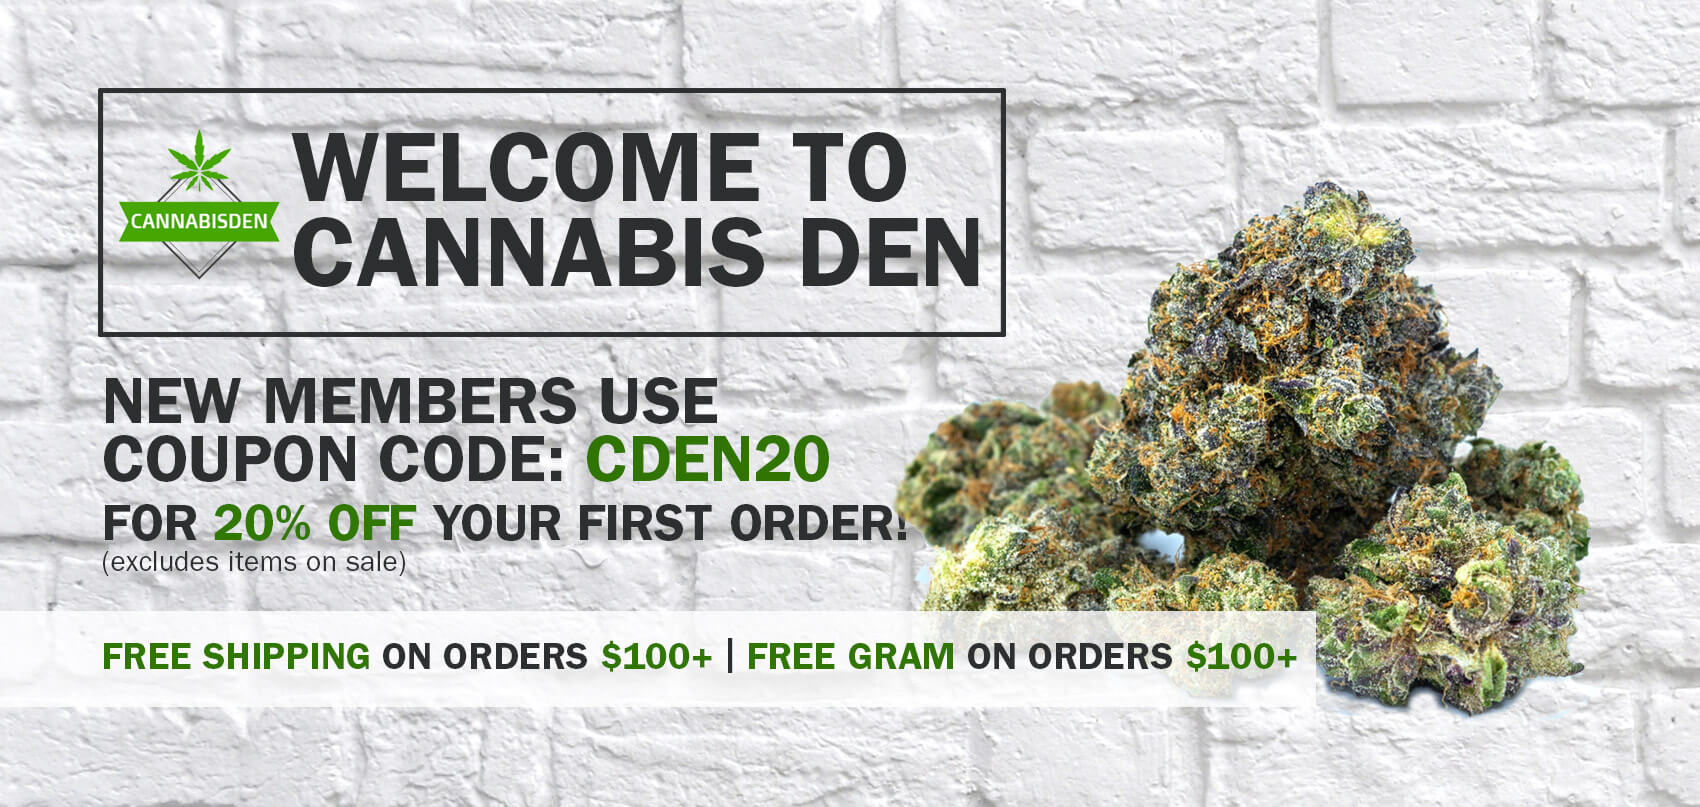 cannabis den homepage banner promo sale